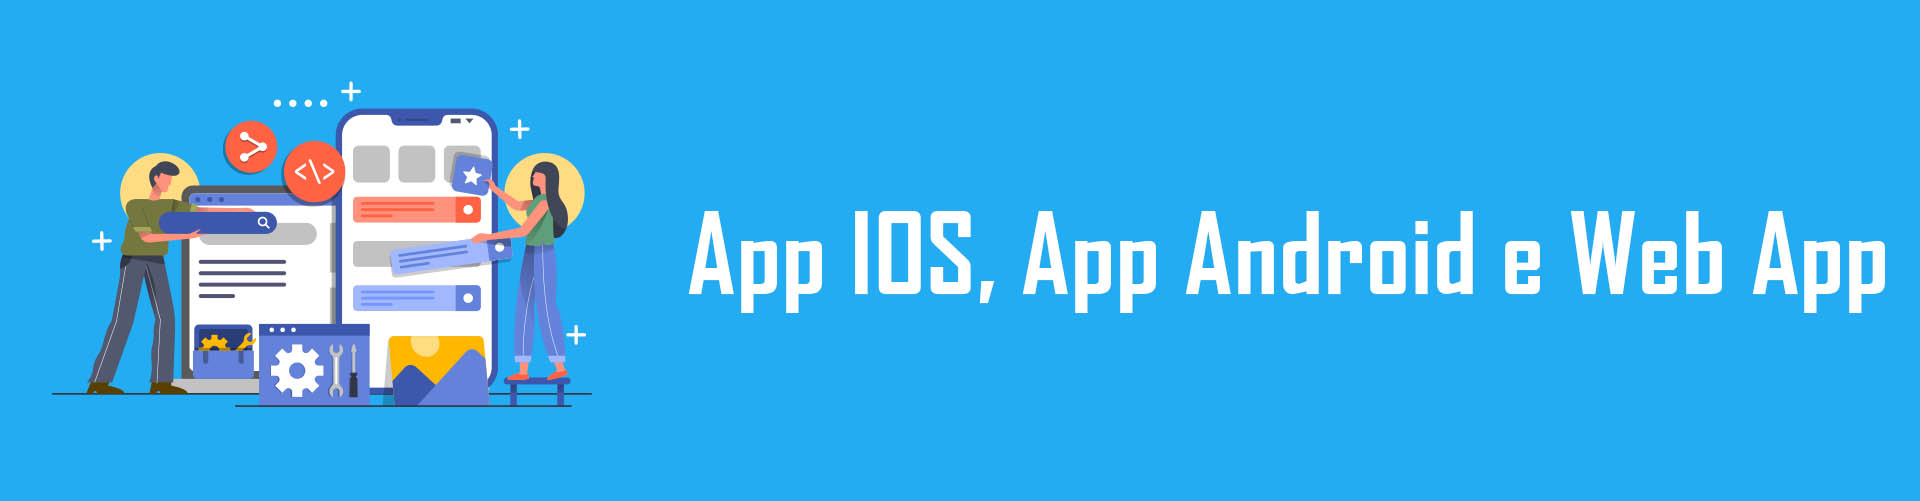 Sviluppo App IOS - App Android